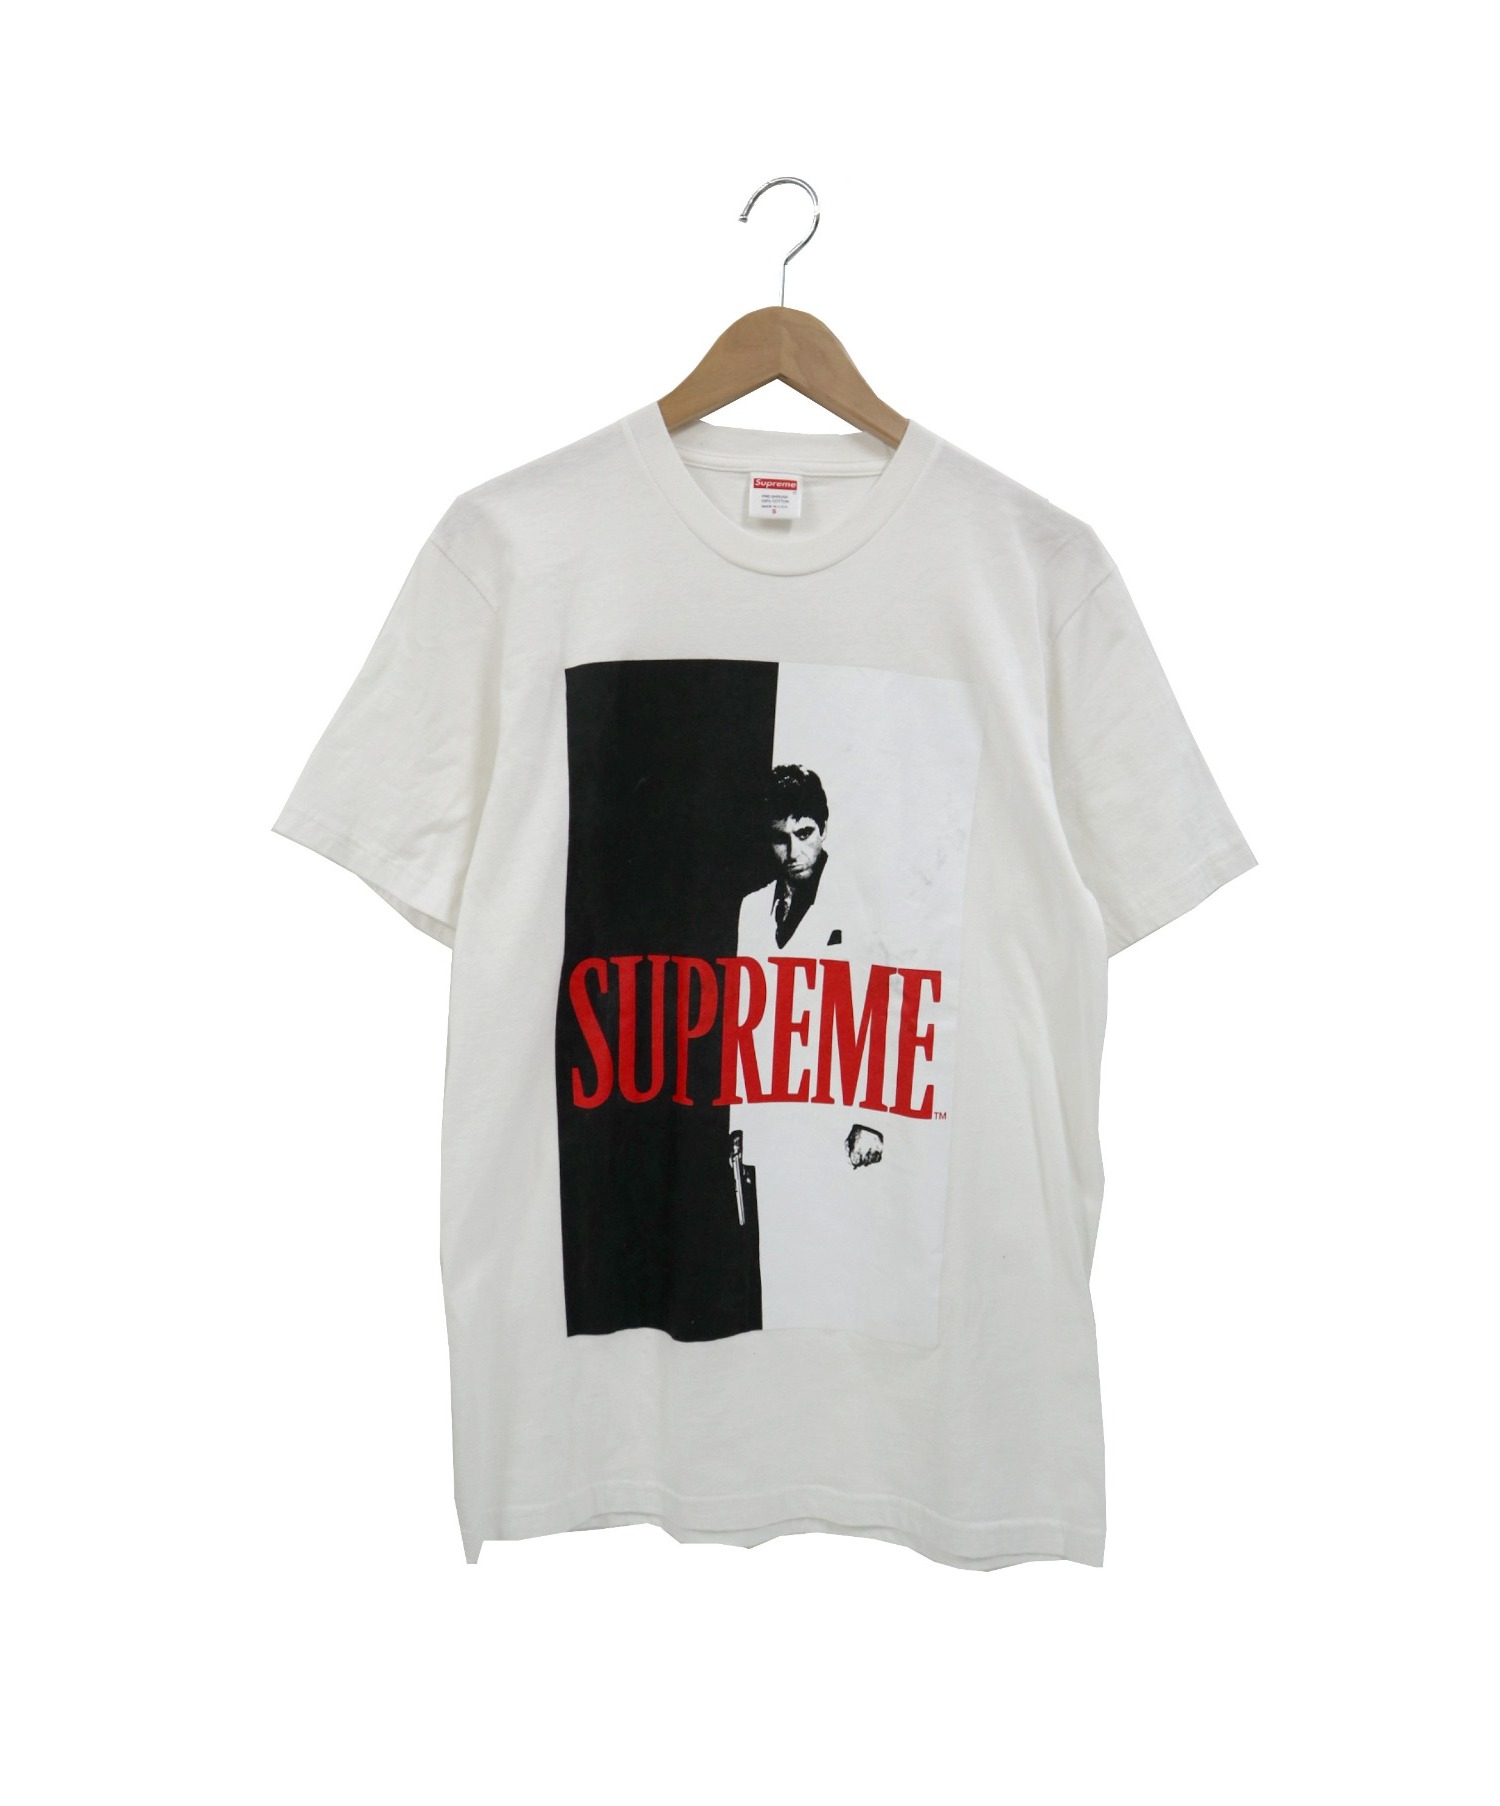 SUPREME (シュプリーム) スカーフェイススプリットTシャツ ホワイト サイズ:S 17AW Scarface Split Tee